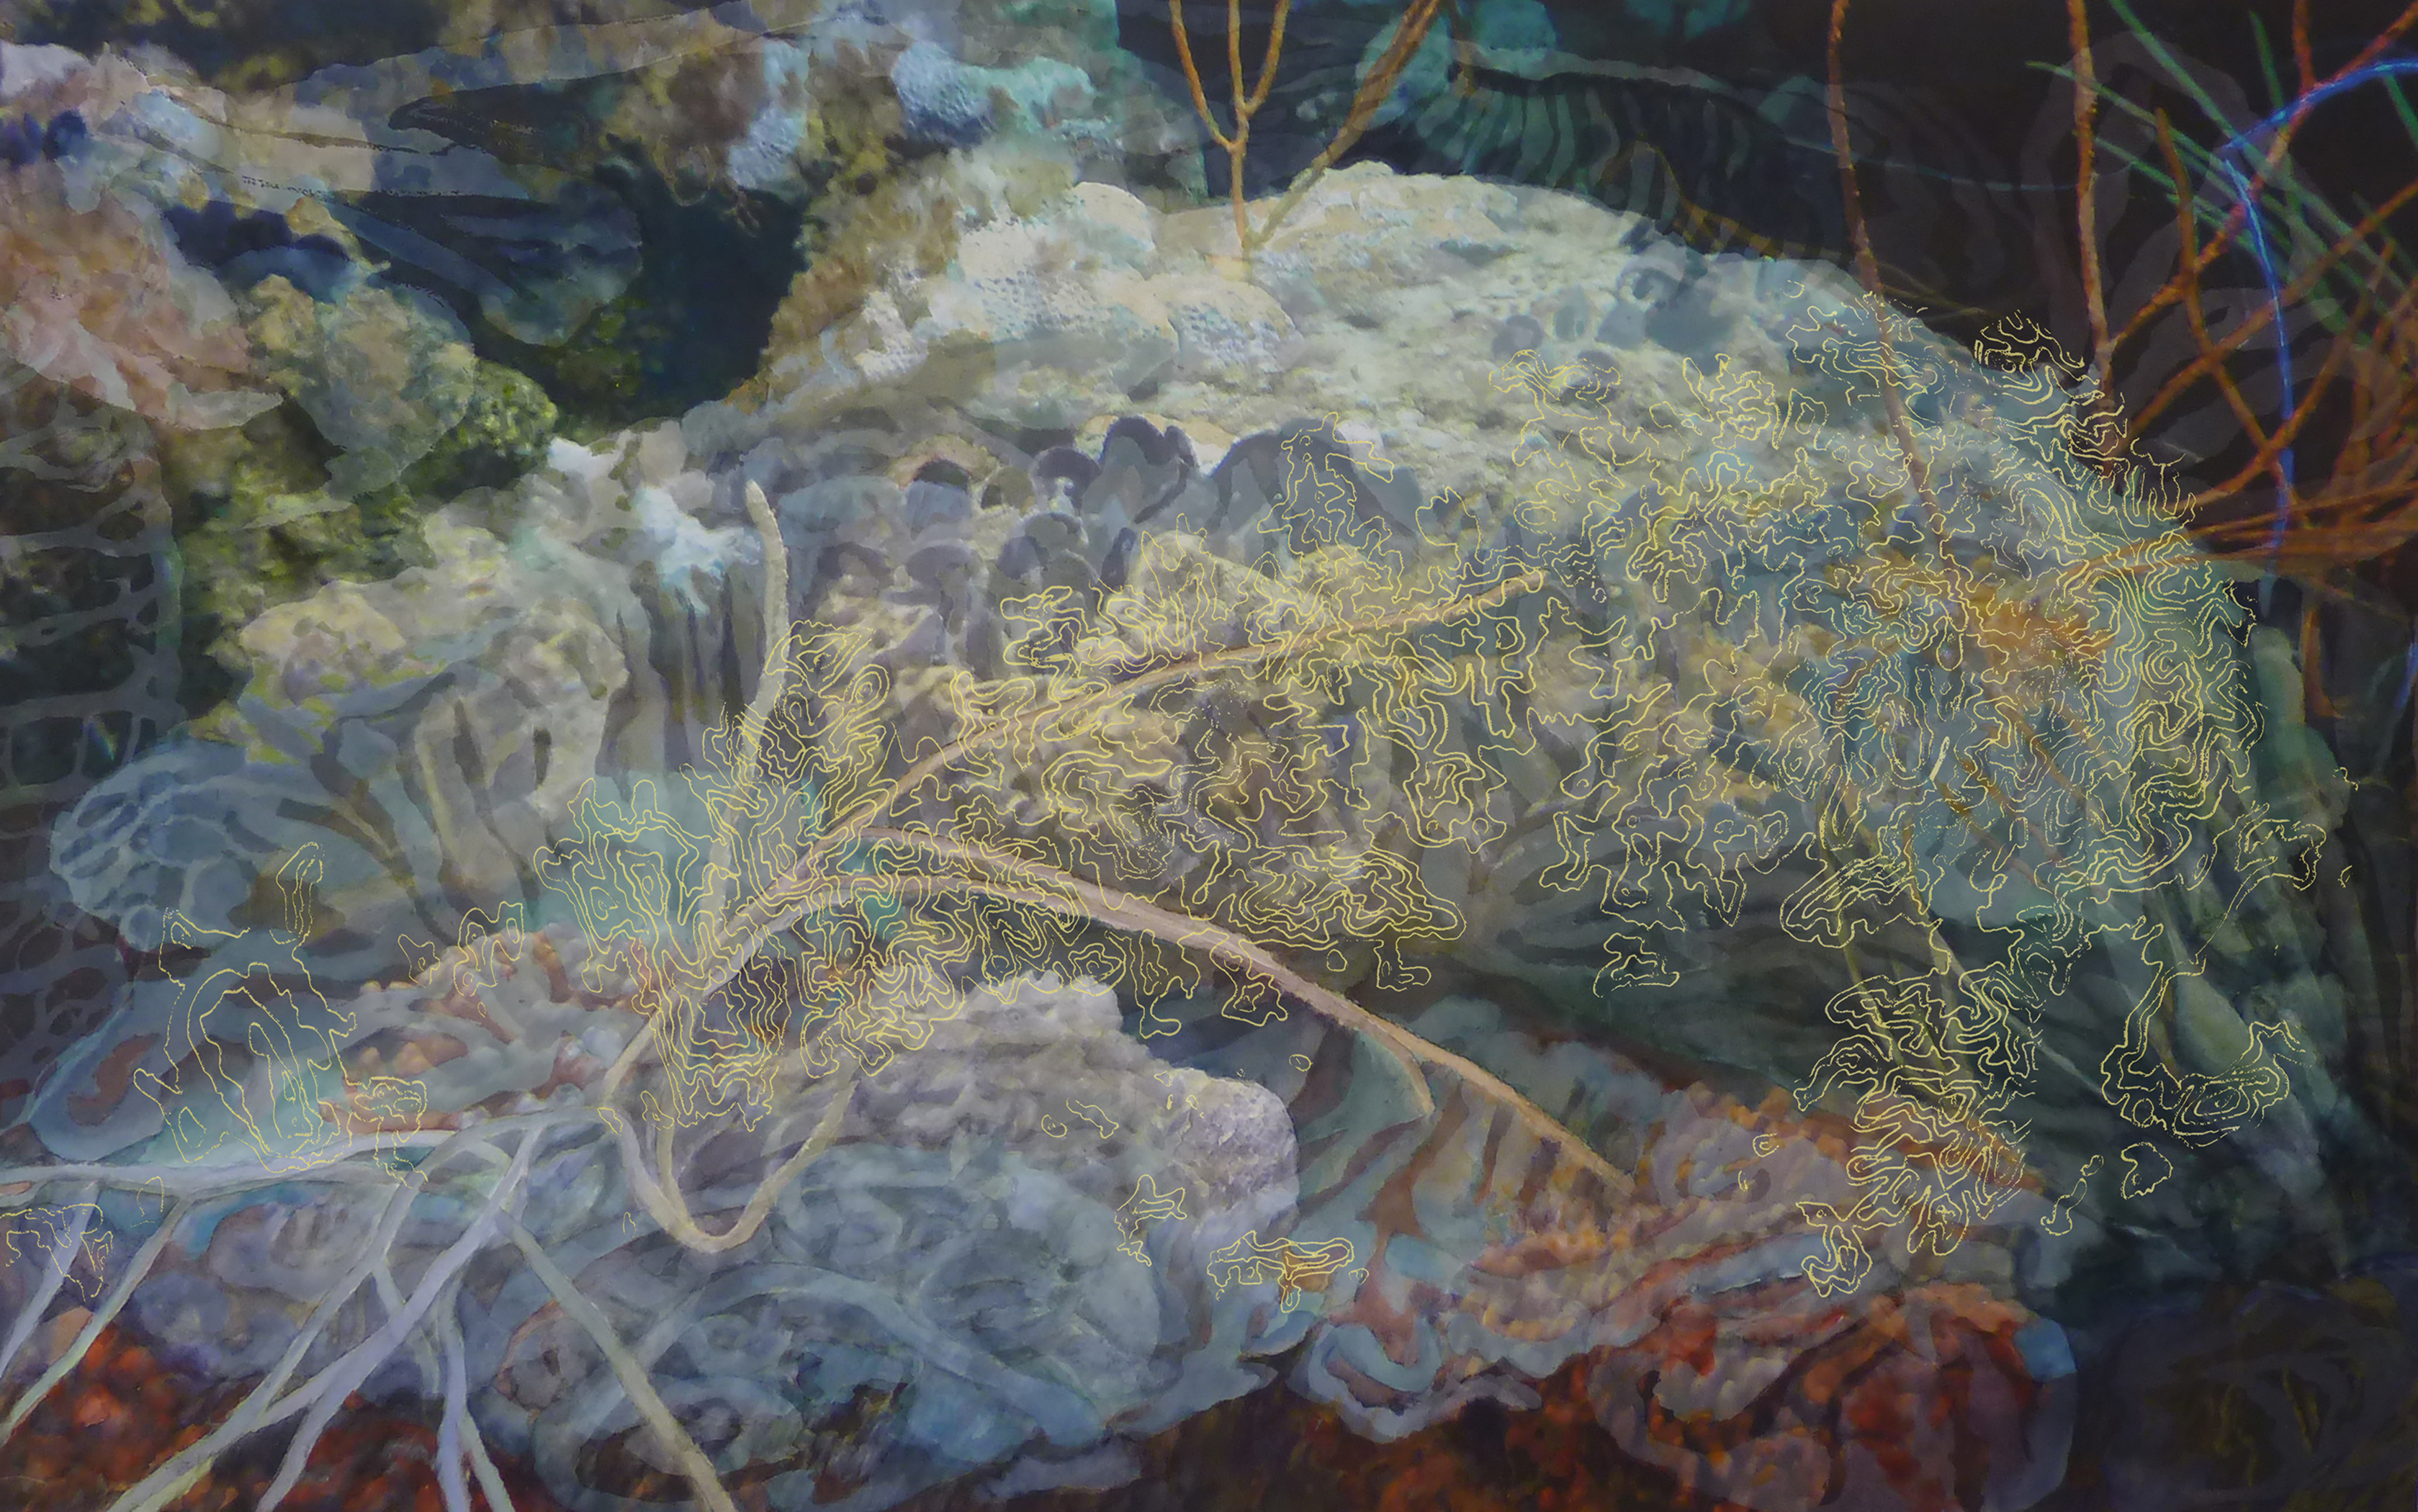 Reef, 2017, Watercolor, archival pigment print on paper & Plexiglas, 29” x 44”